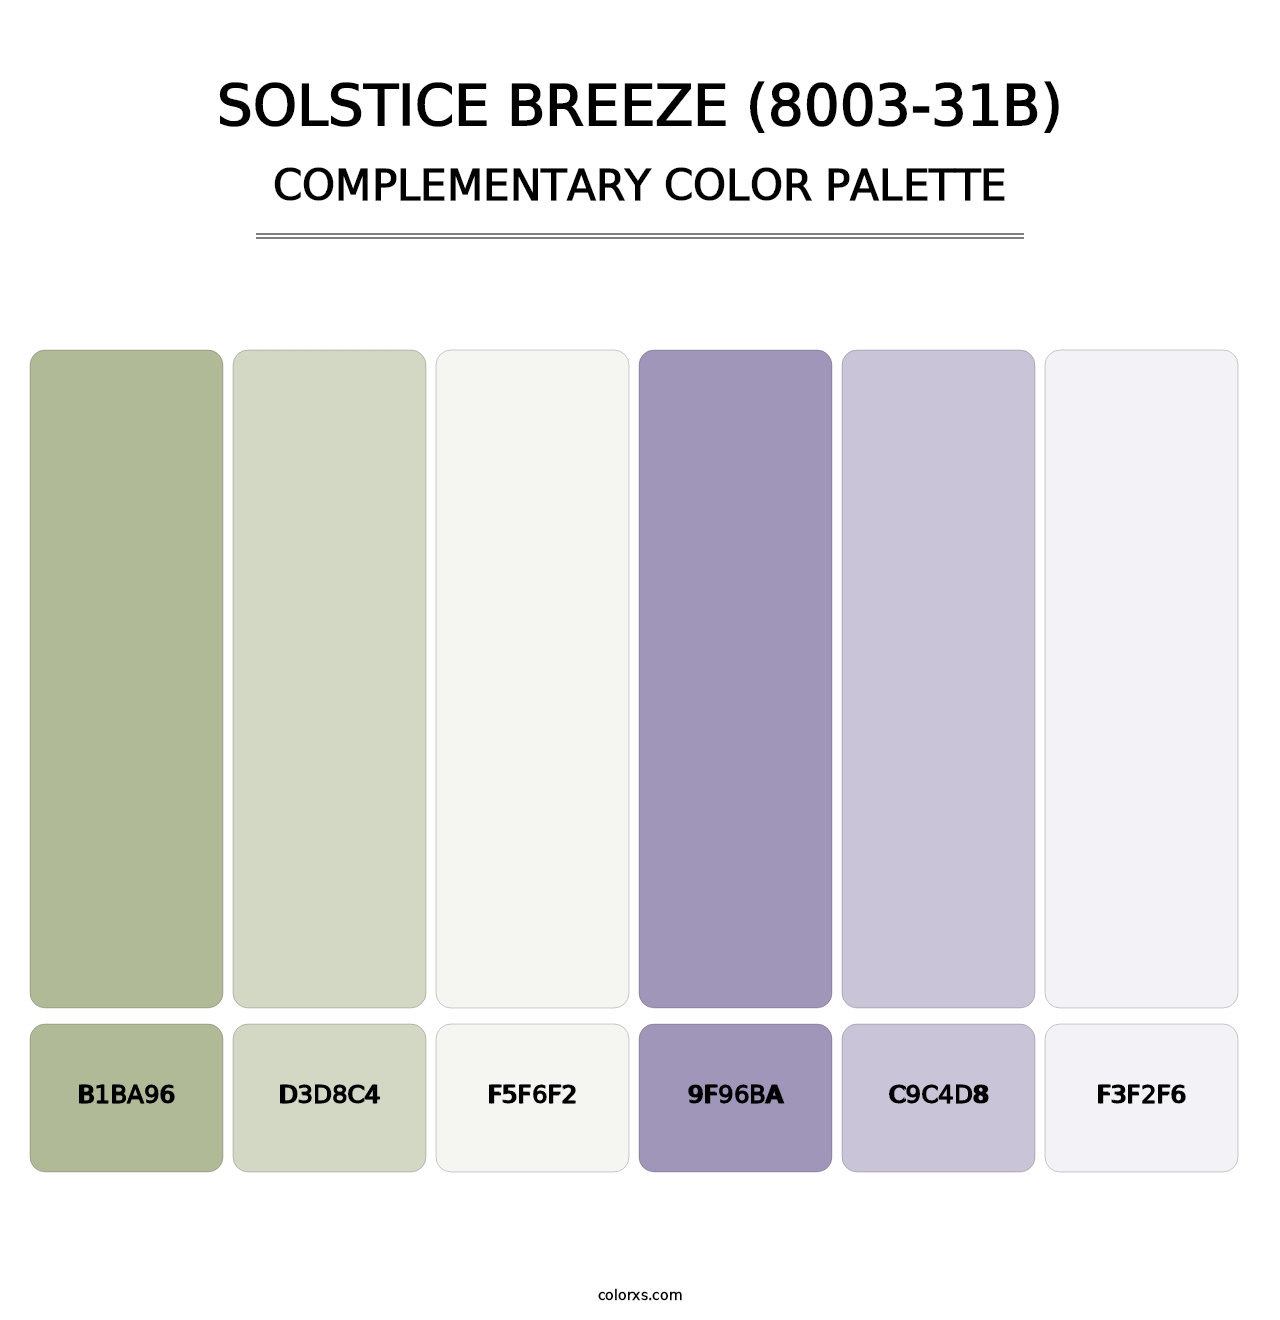 Solstice Breeze (8003-31B) - Complementary Color Palette